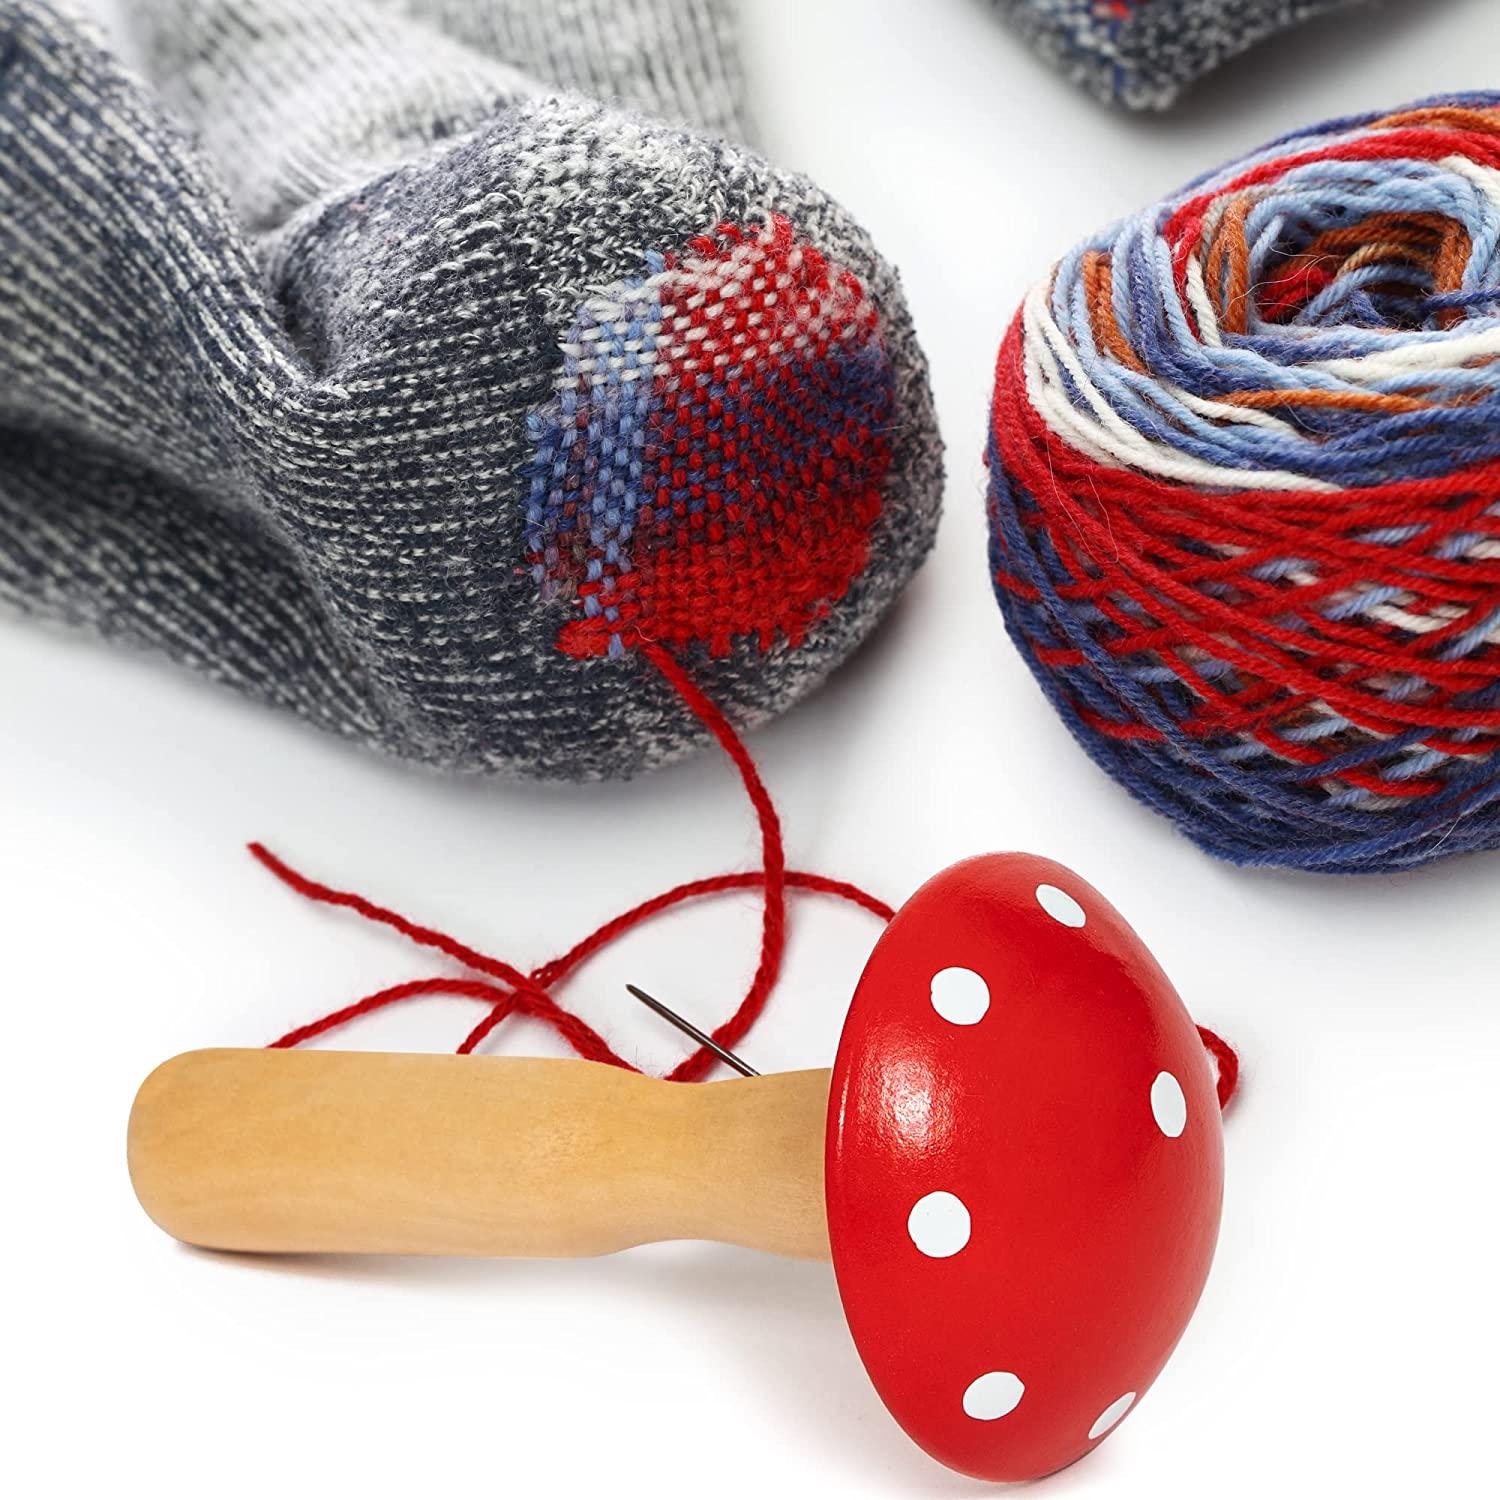 YWNYT Sock Darning Kit，Wooden Darning Egg Wooden Darning Supplies Kit Wood  Darning Mushroom Darning Needle Thread for Socks Clothes Adults Darner DIY